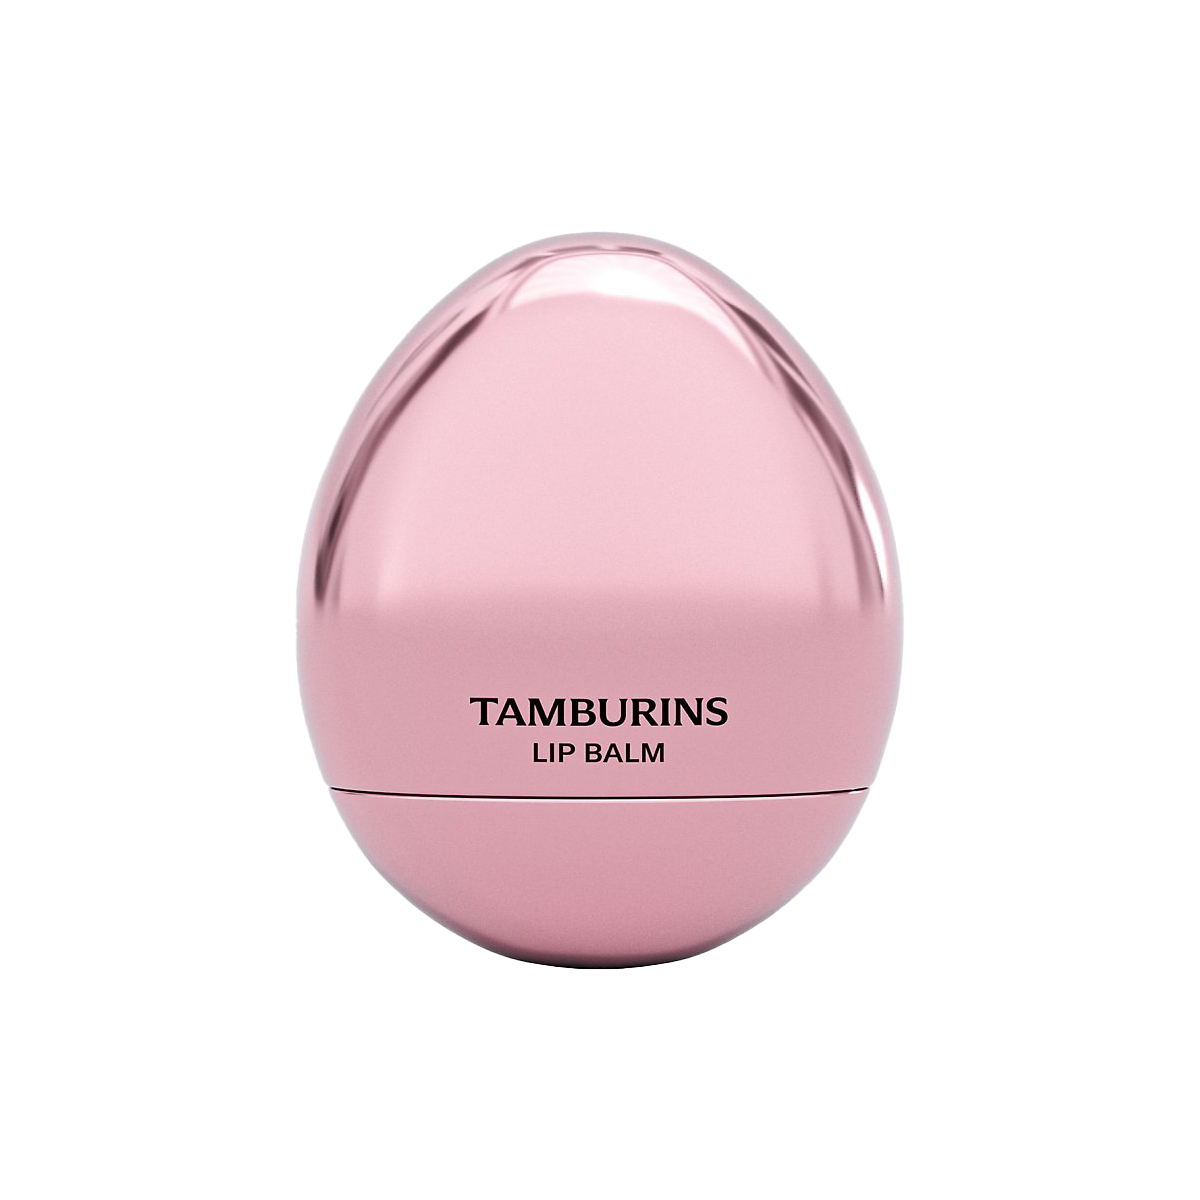 TAMBURINS Egg Lip Balm in pink, a moisturizing lip balm by tamburns.